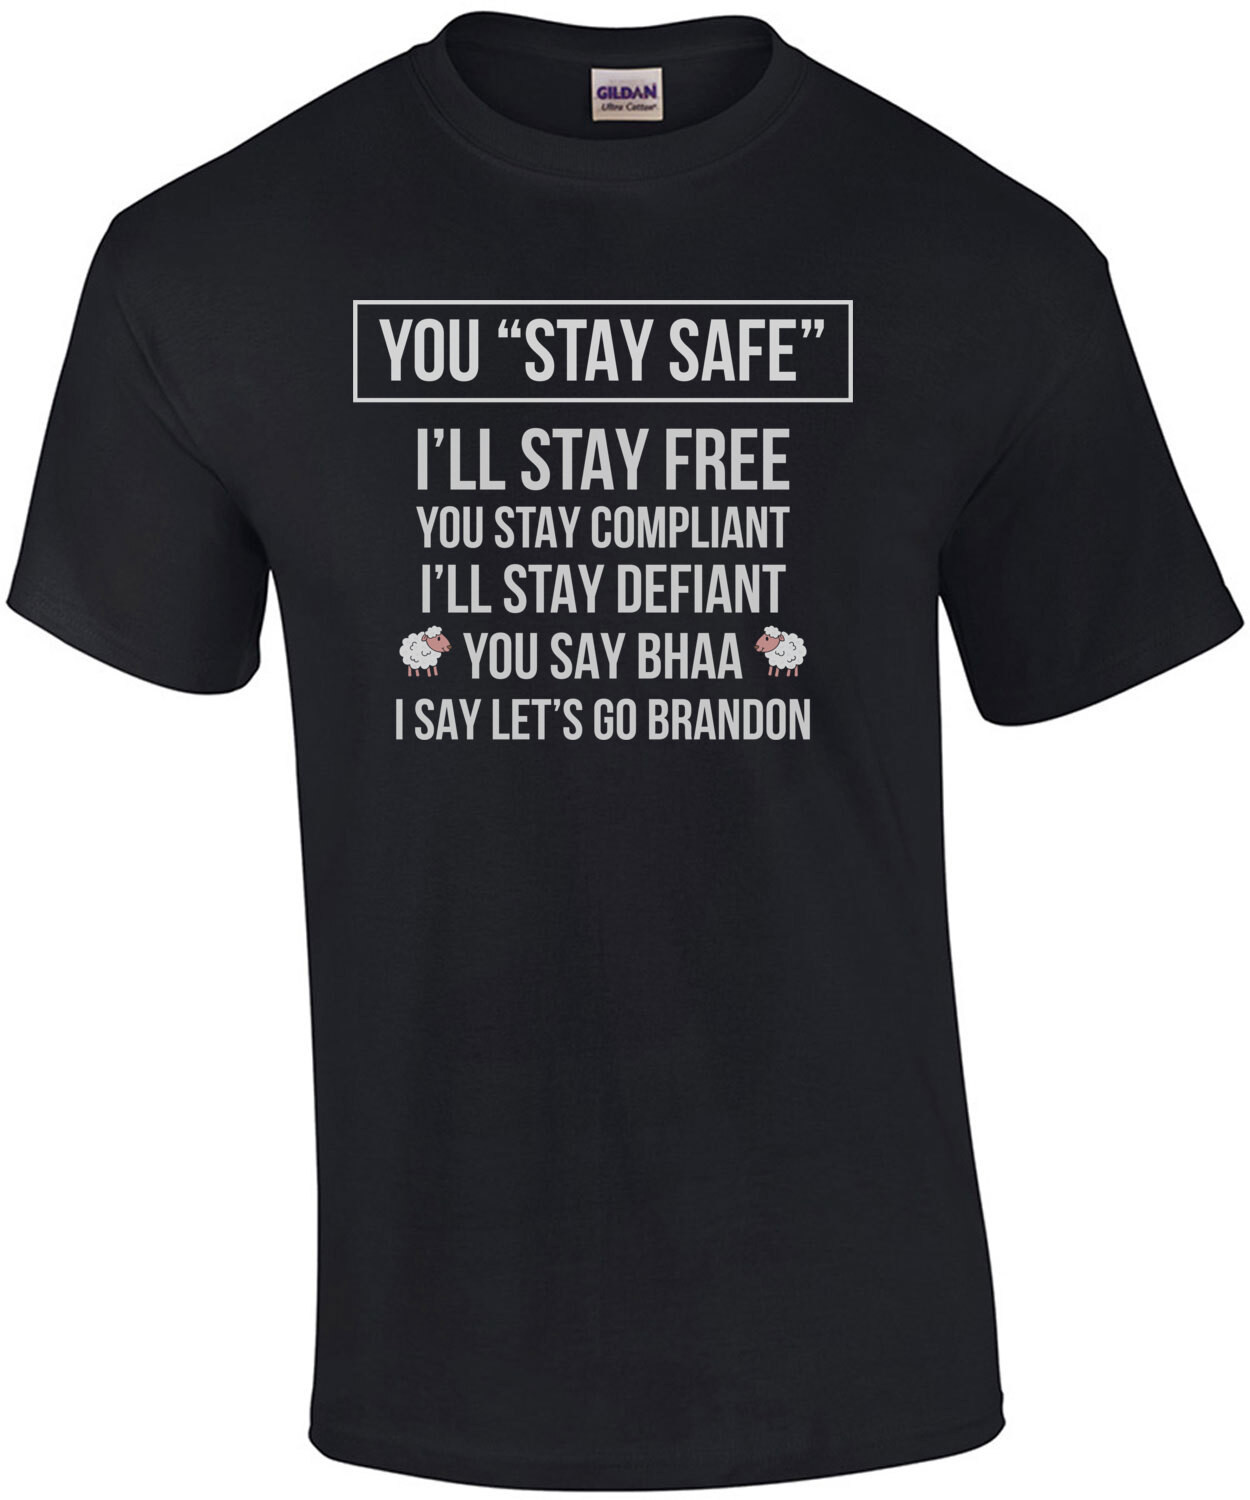 You stay safe, I'll stay free - Let's Go Brandon - Anti Joe Biden t-shirt